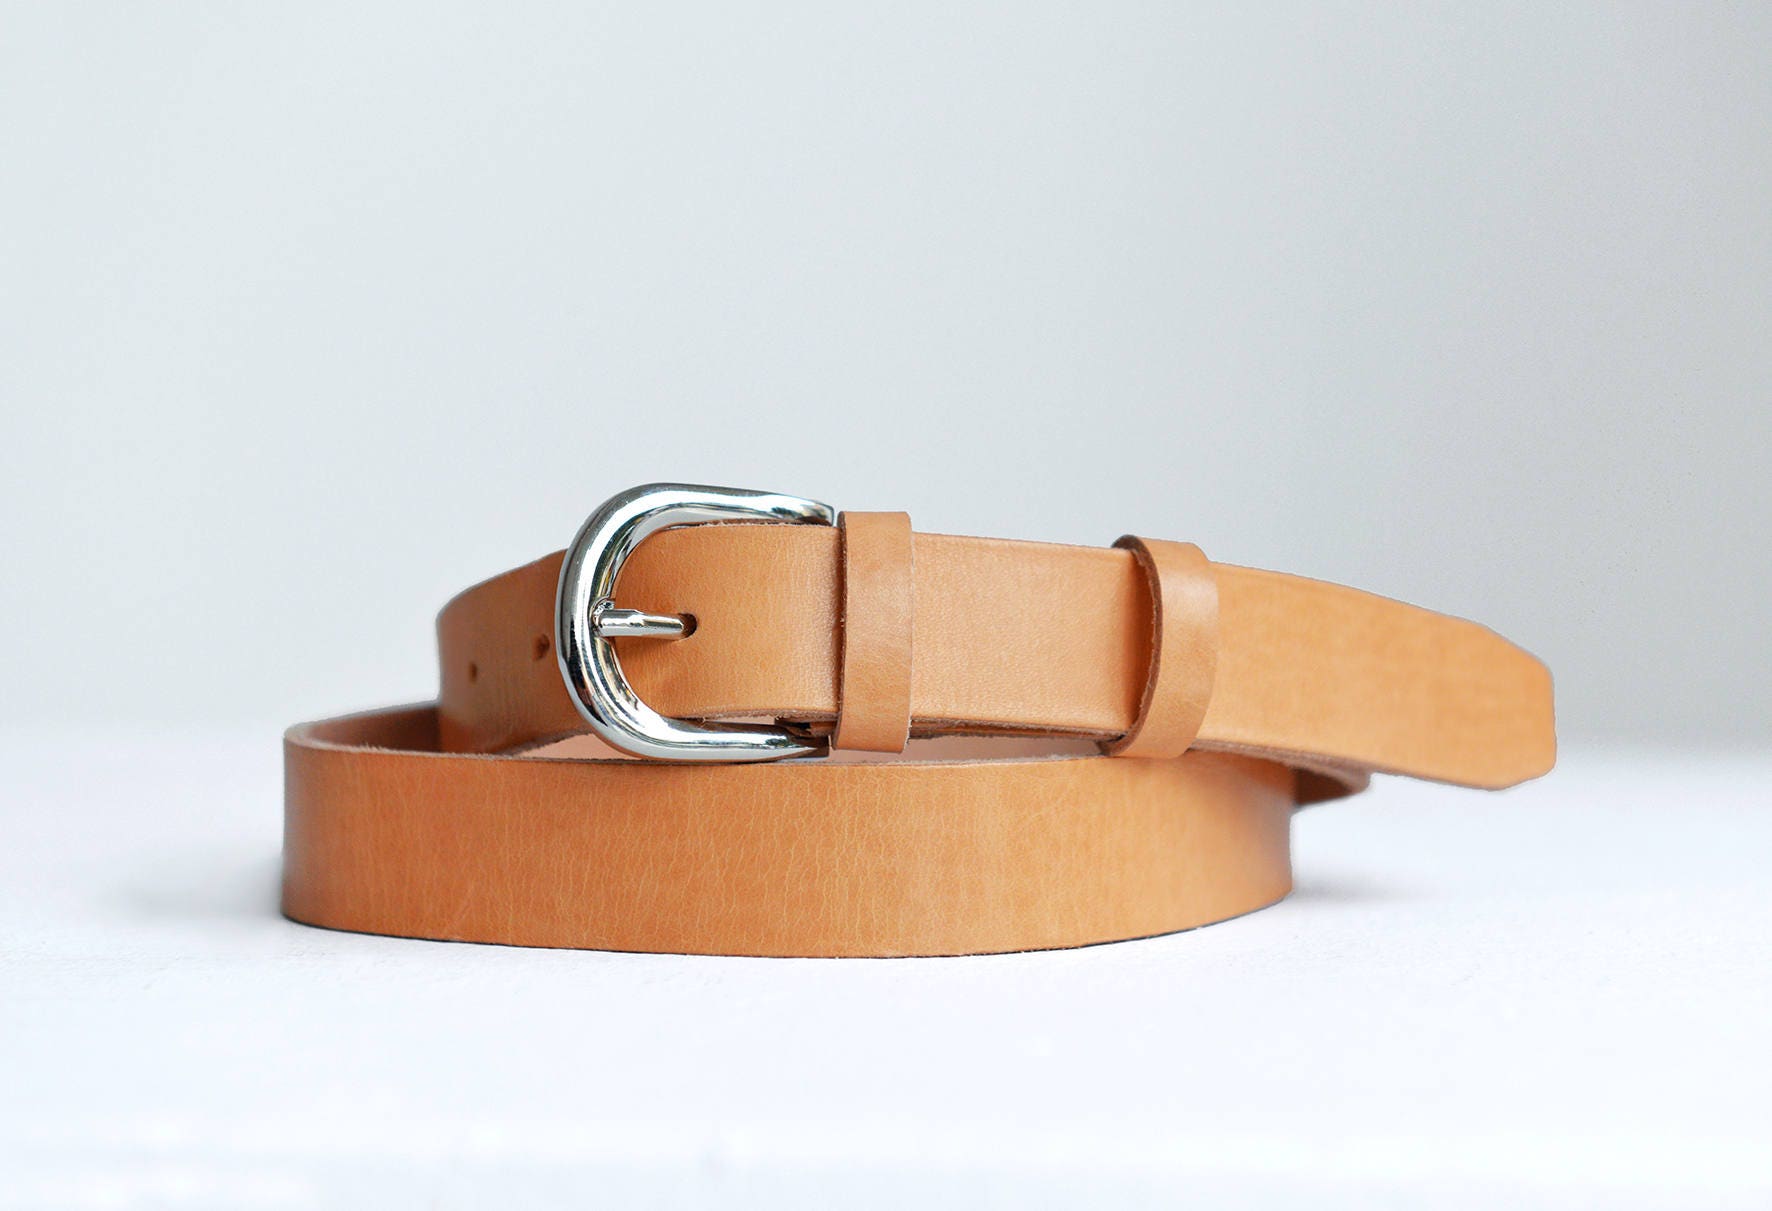 Women's Belt JOOP! - 8363 D'Brown 205 - Women's belts - Belts - Leather  goods - Accessories